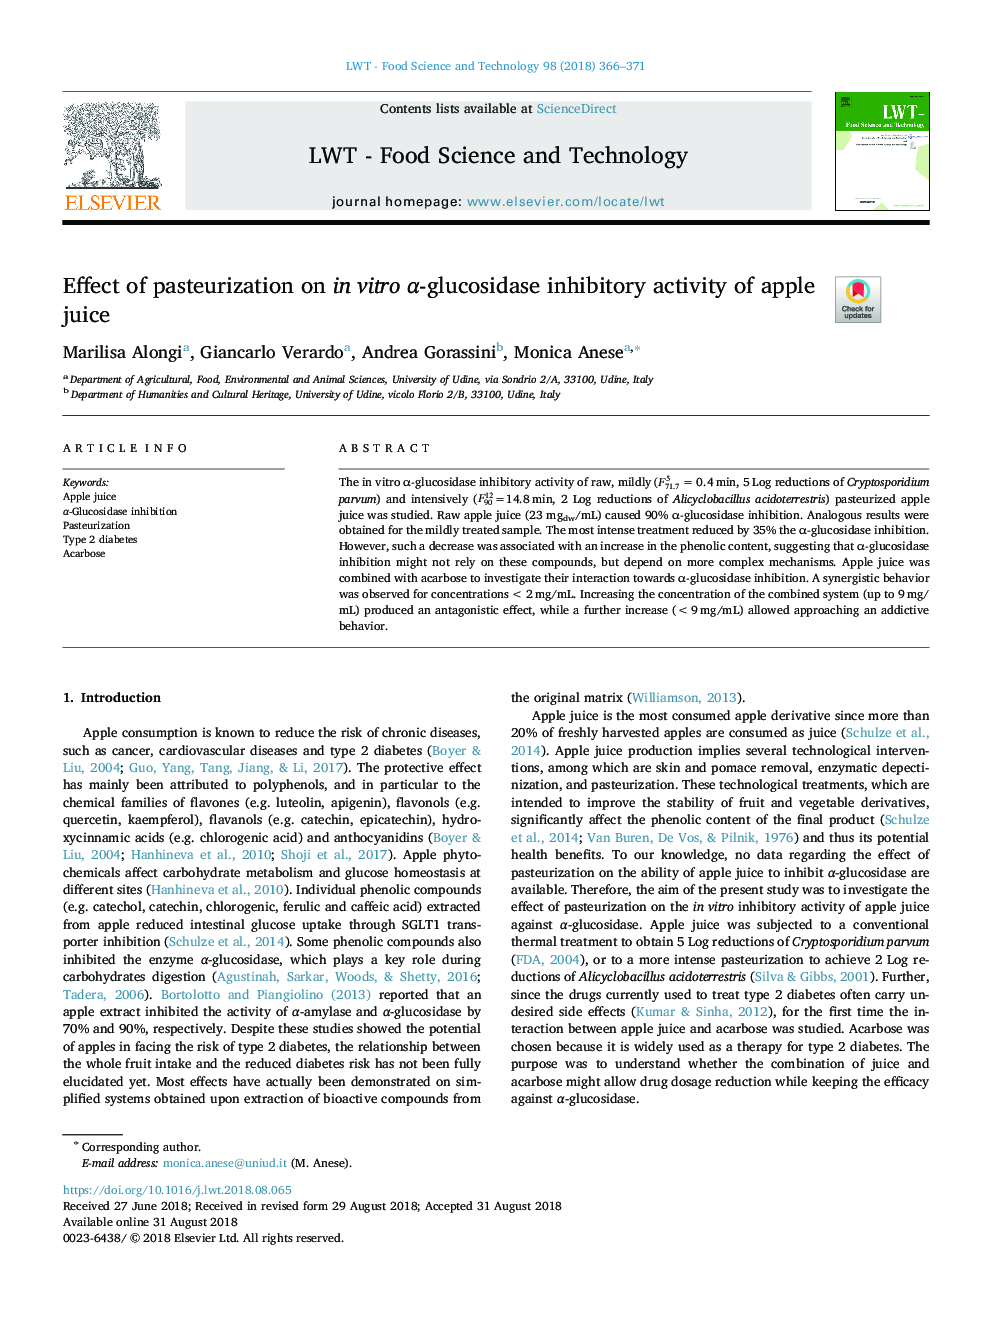 Effect of pasteurization on in vitro Î±-glucosidase inhibitory activity of apple juice